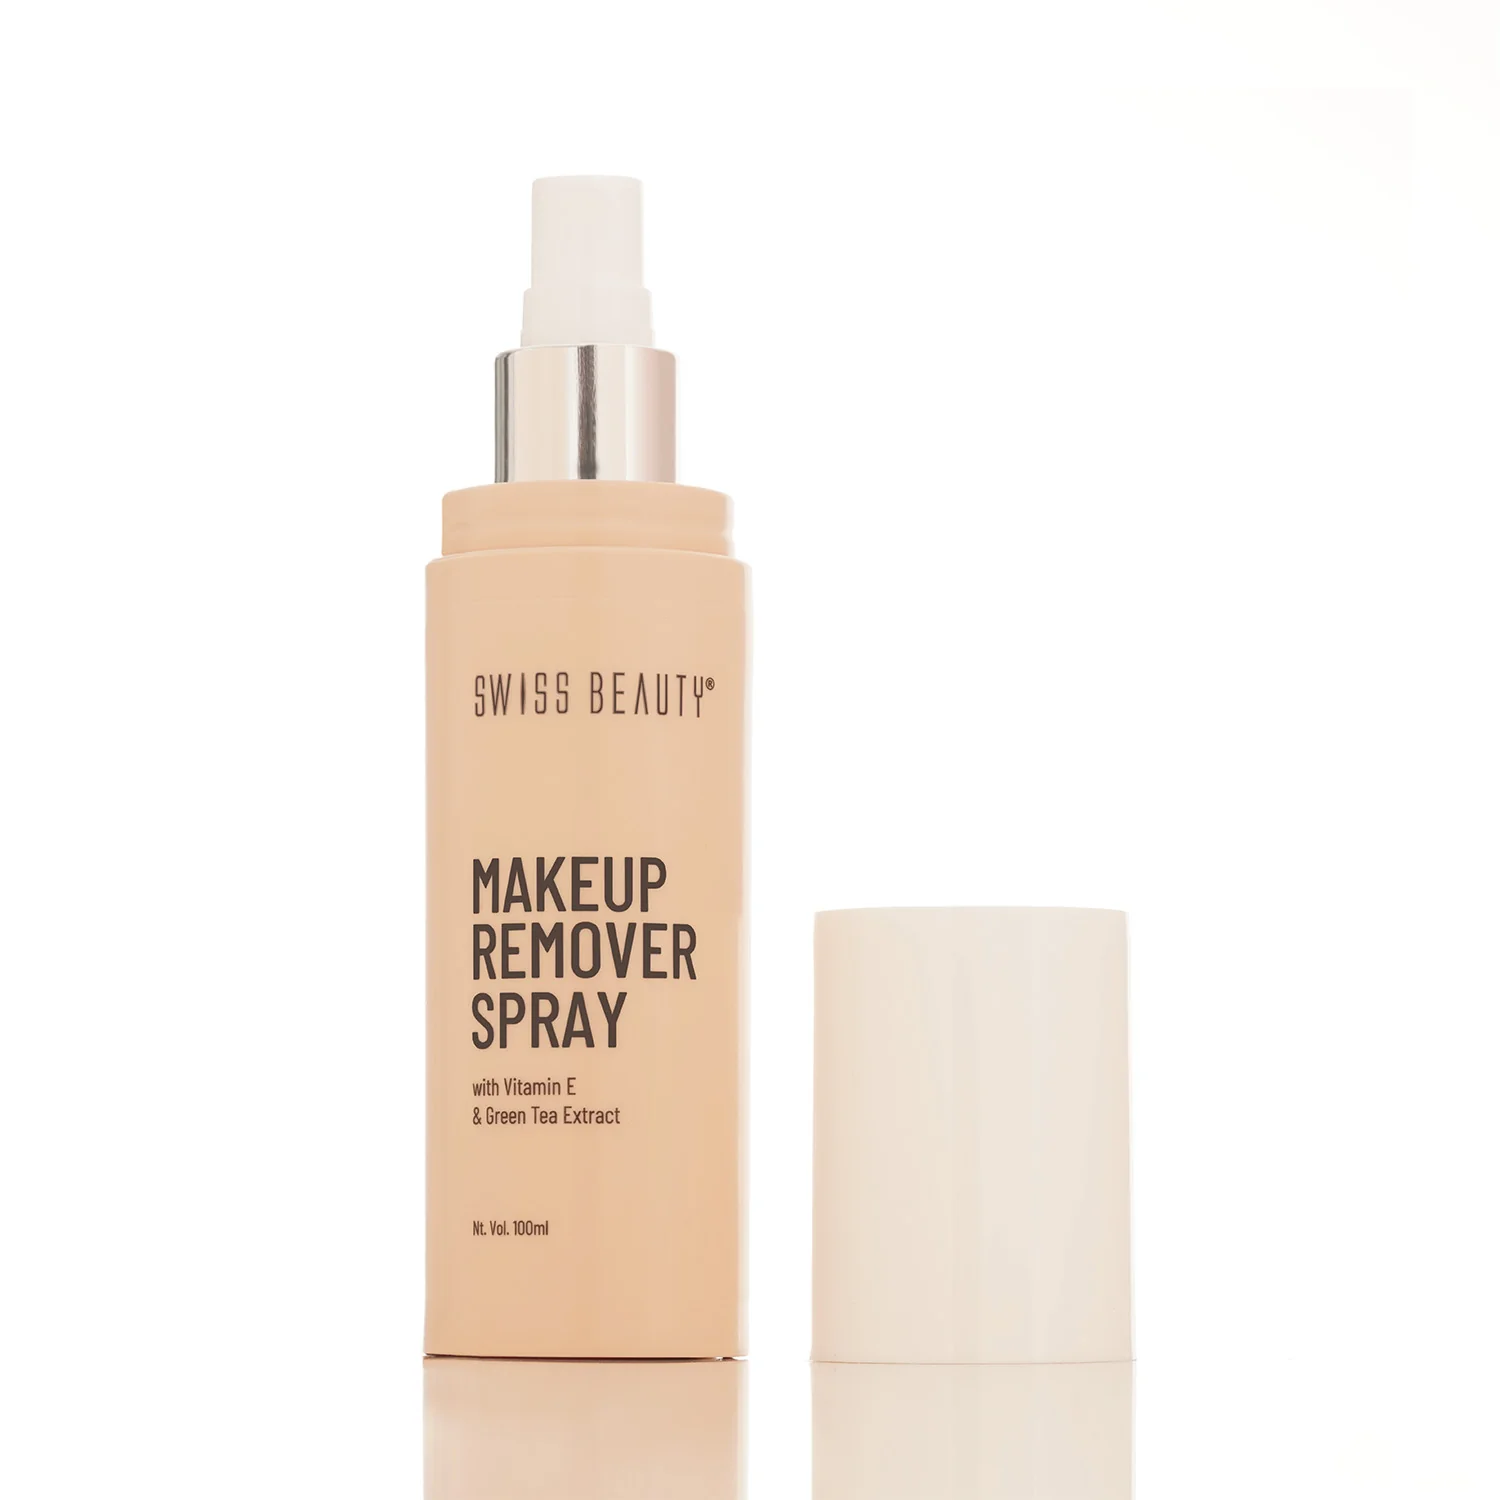 Swiss beauty makeup remover spray